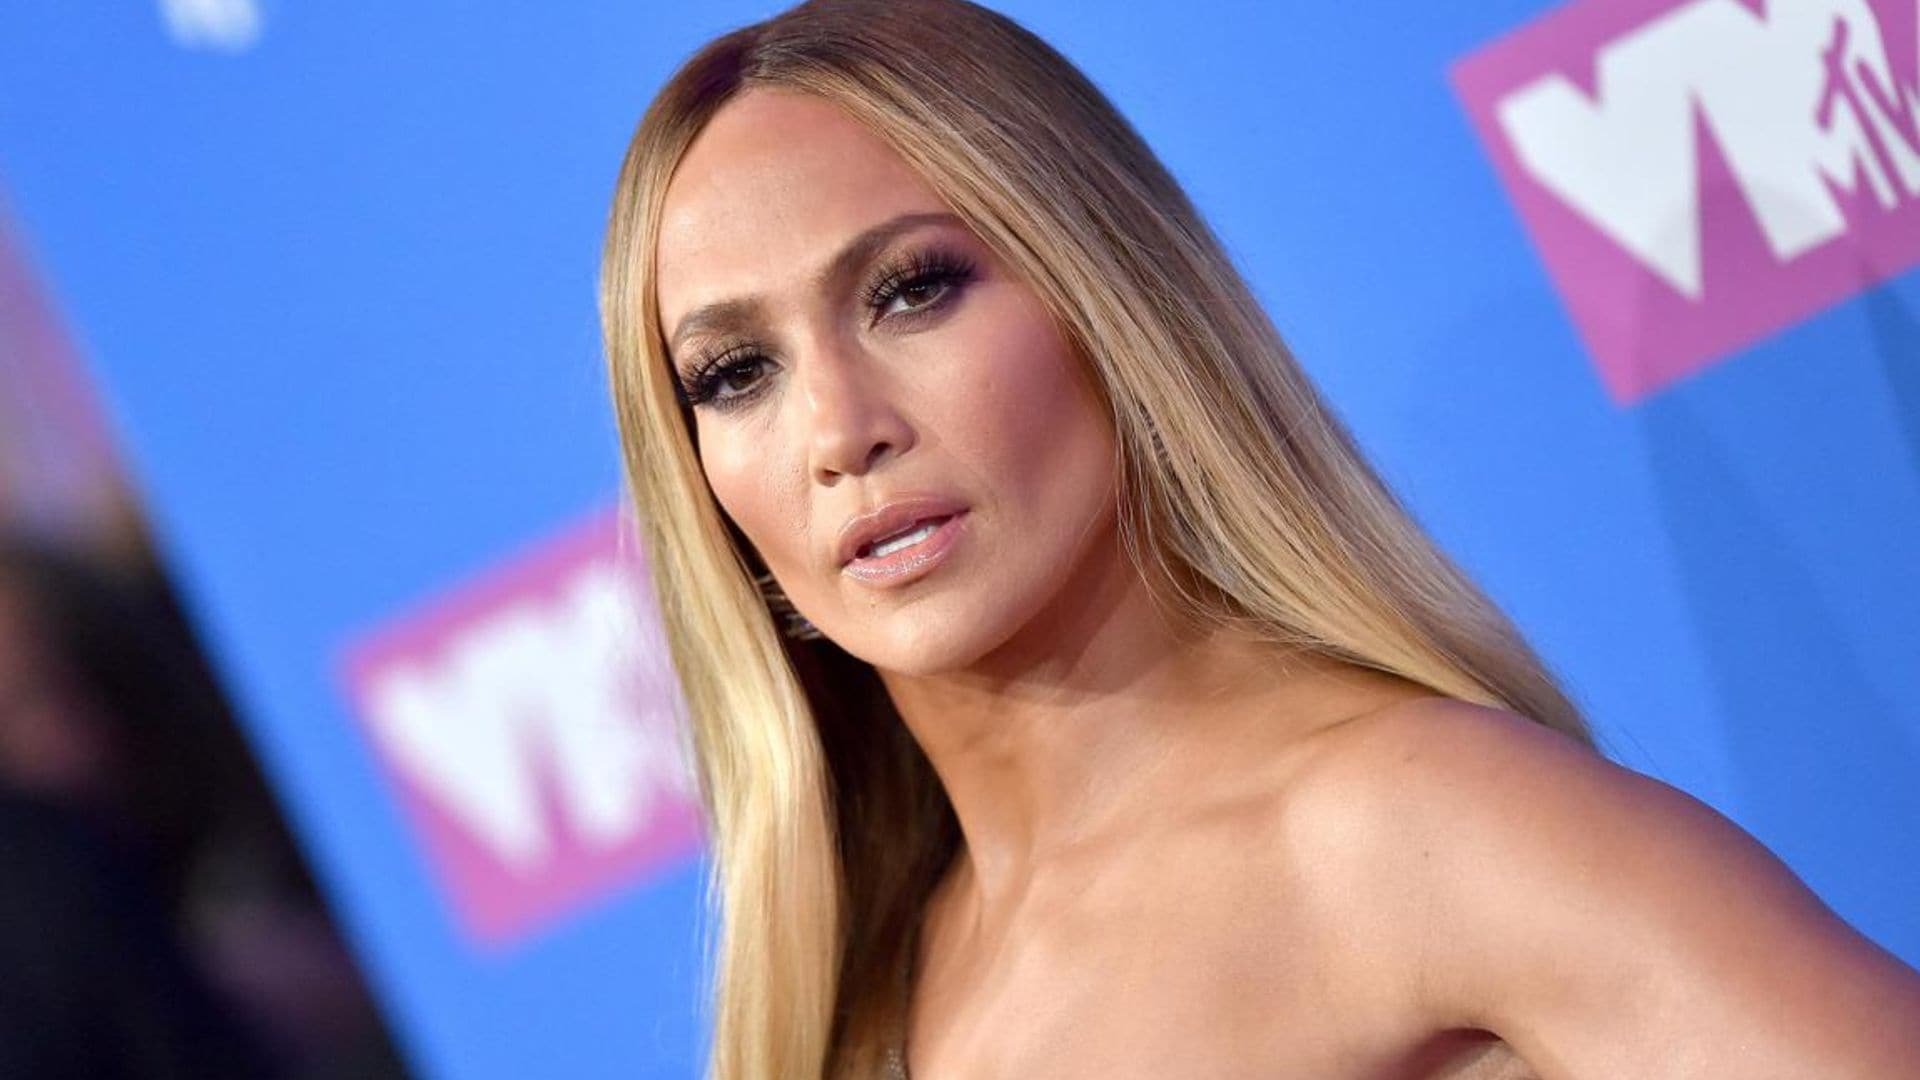 Jennifer Lopez rocks an ‘80’s inspired shaggy hairstyle